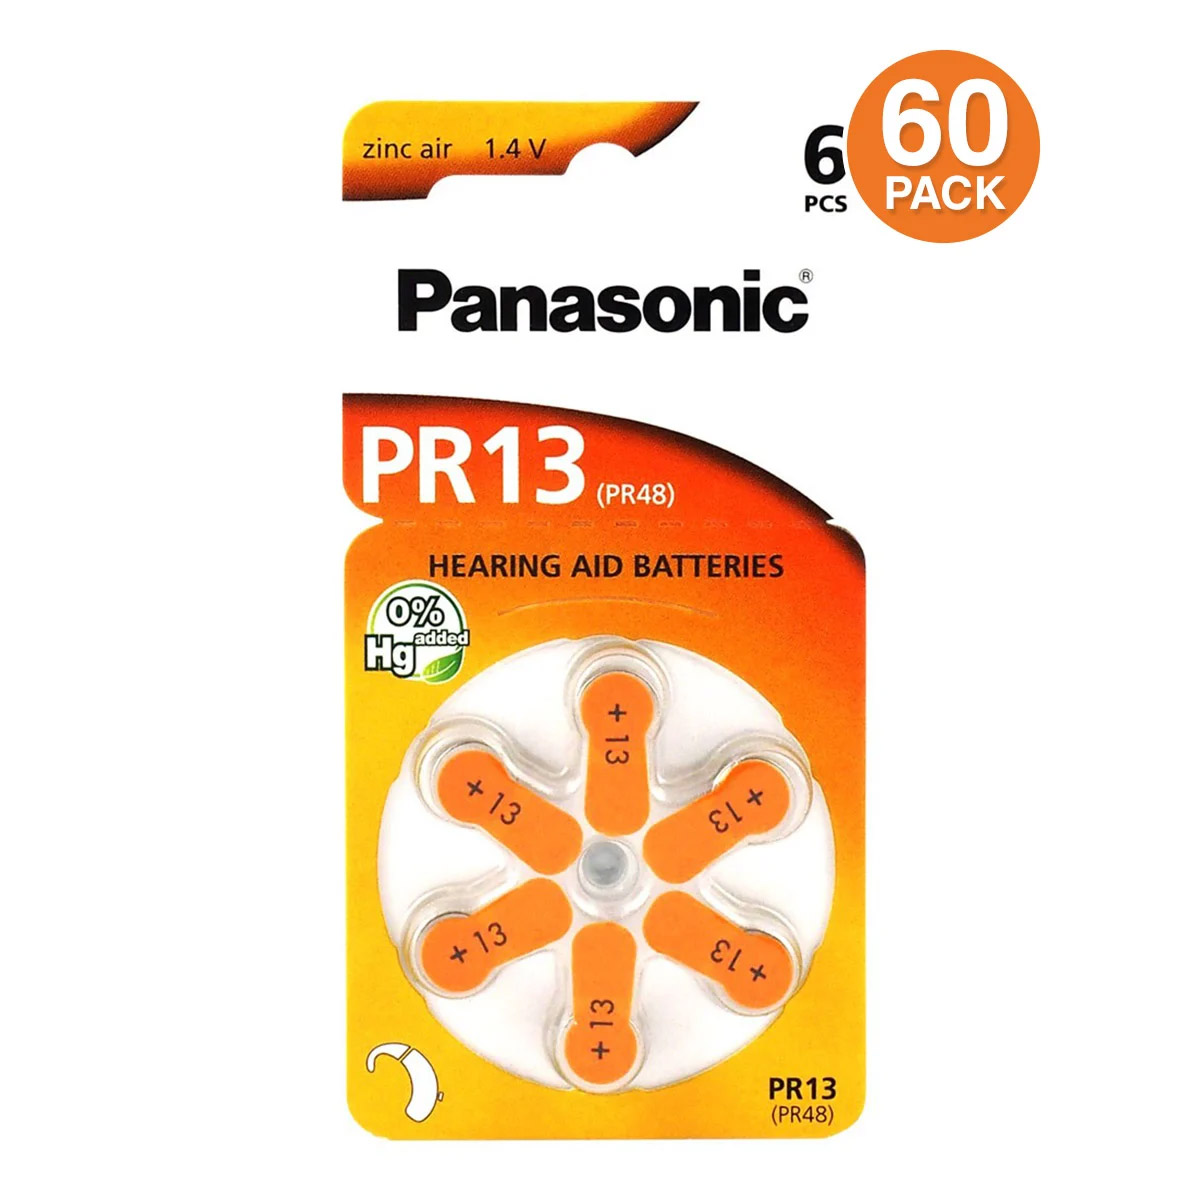 Panasonic Size 13 Hearing Aid Batteries 1.4 Volt Zinc Air (60 Batteries)